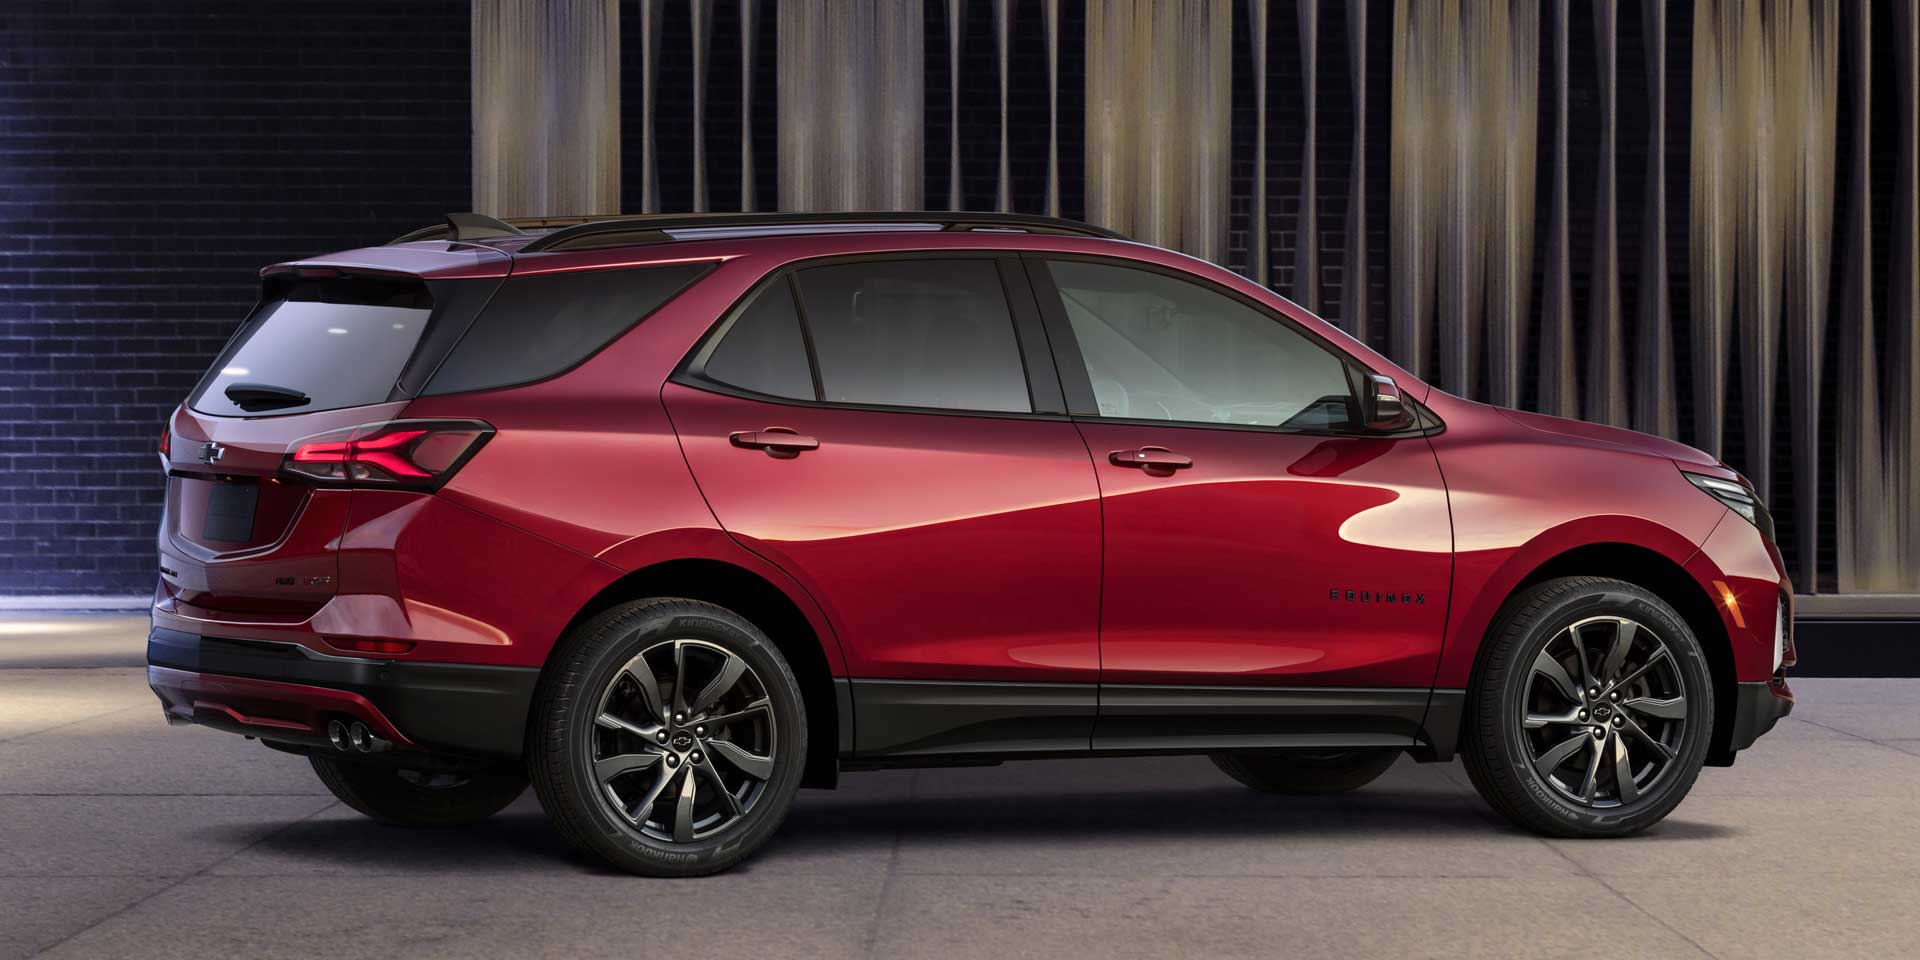 2021 - Chevrolet - Equinox - Vehicles on Display | Chicago Auto Show